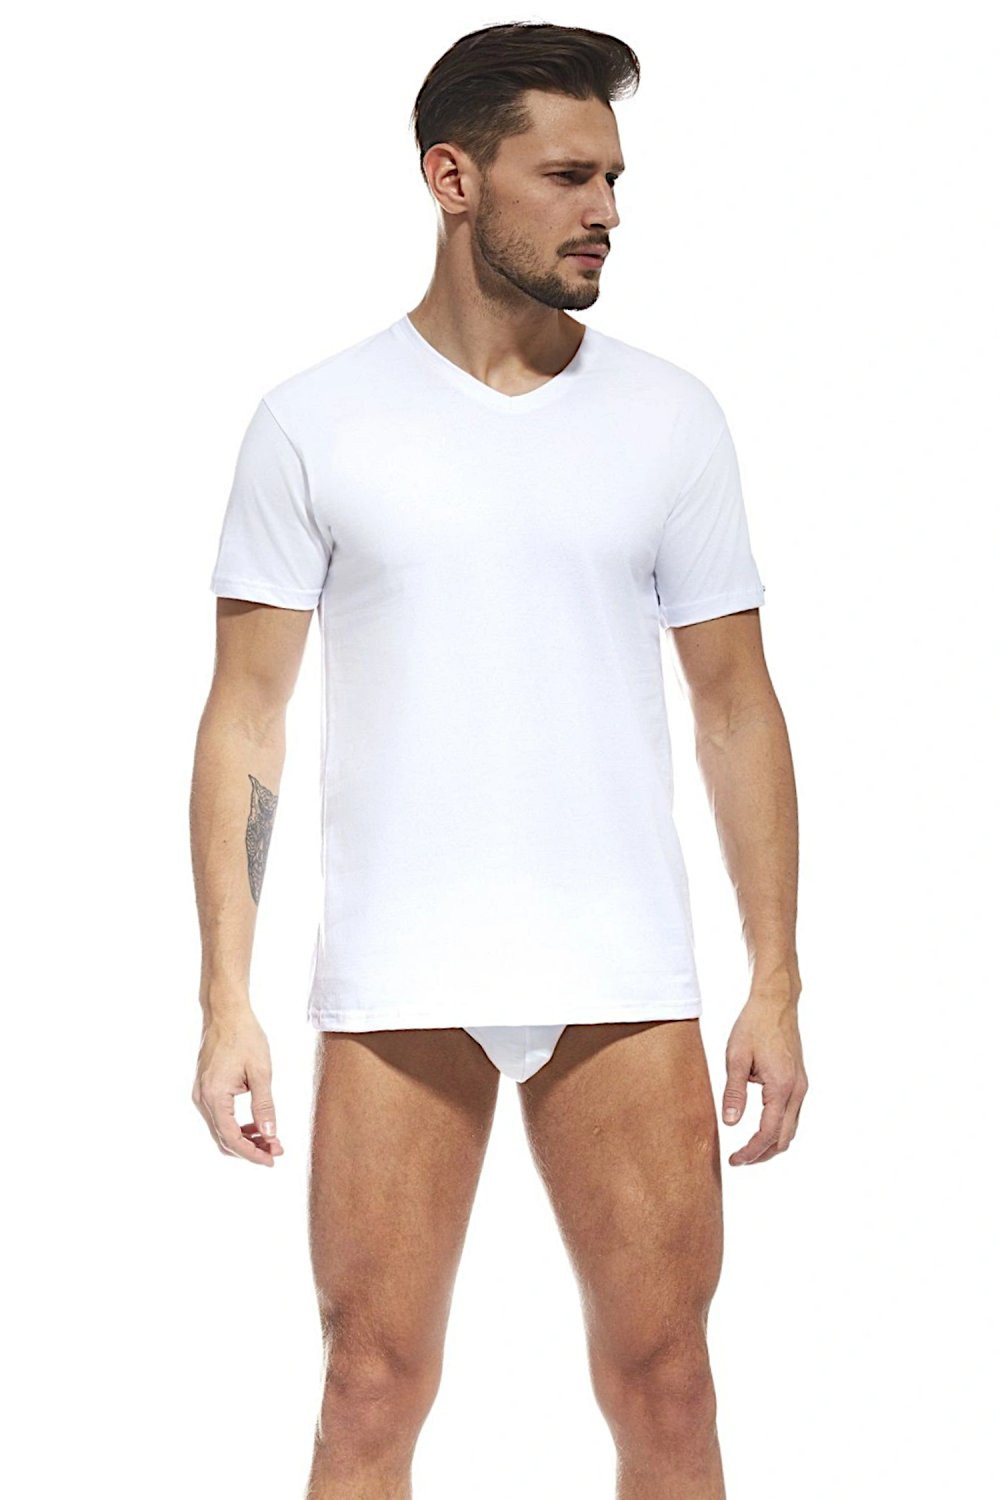 Pánské tričko 201 Authentic new biała - CORNETTE Barva: Bílá, Velikost: XL